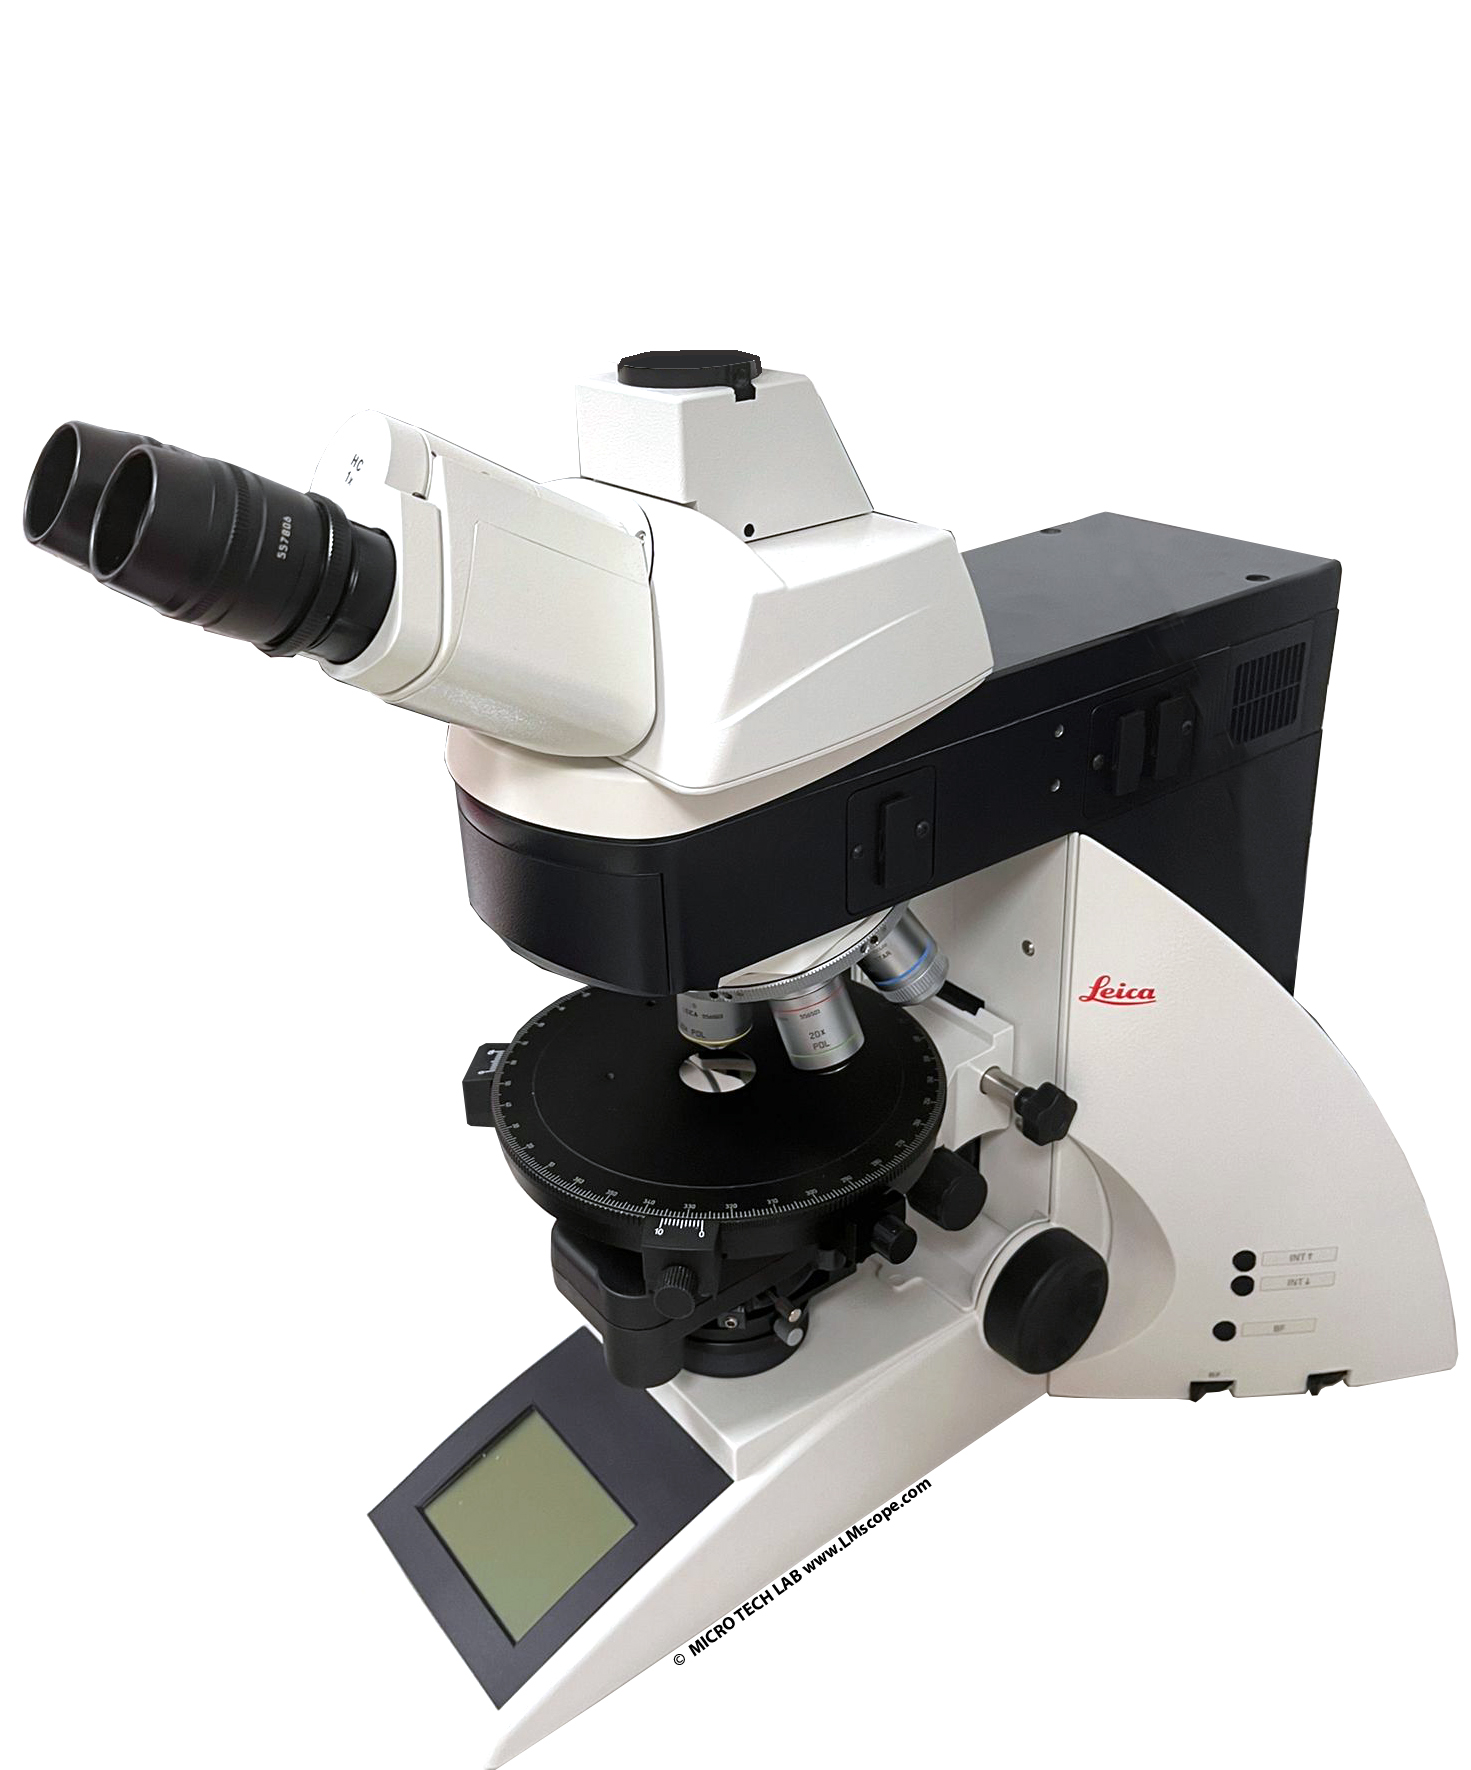 Leica DM4500P microscope transmitted light reflected light